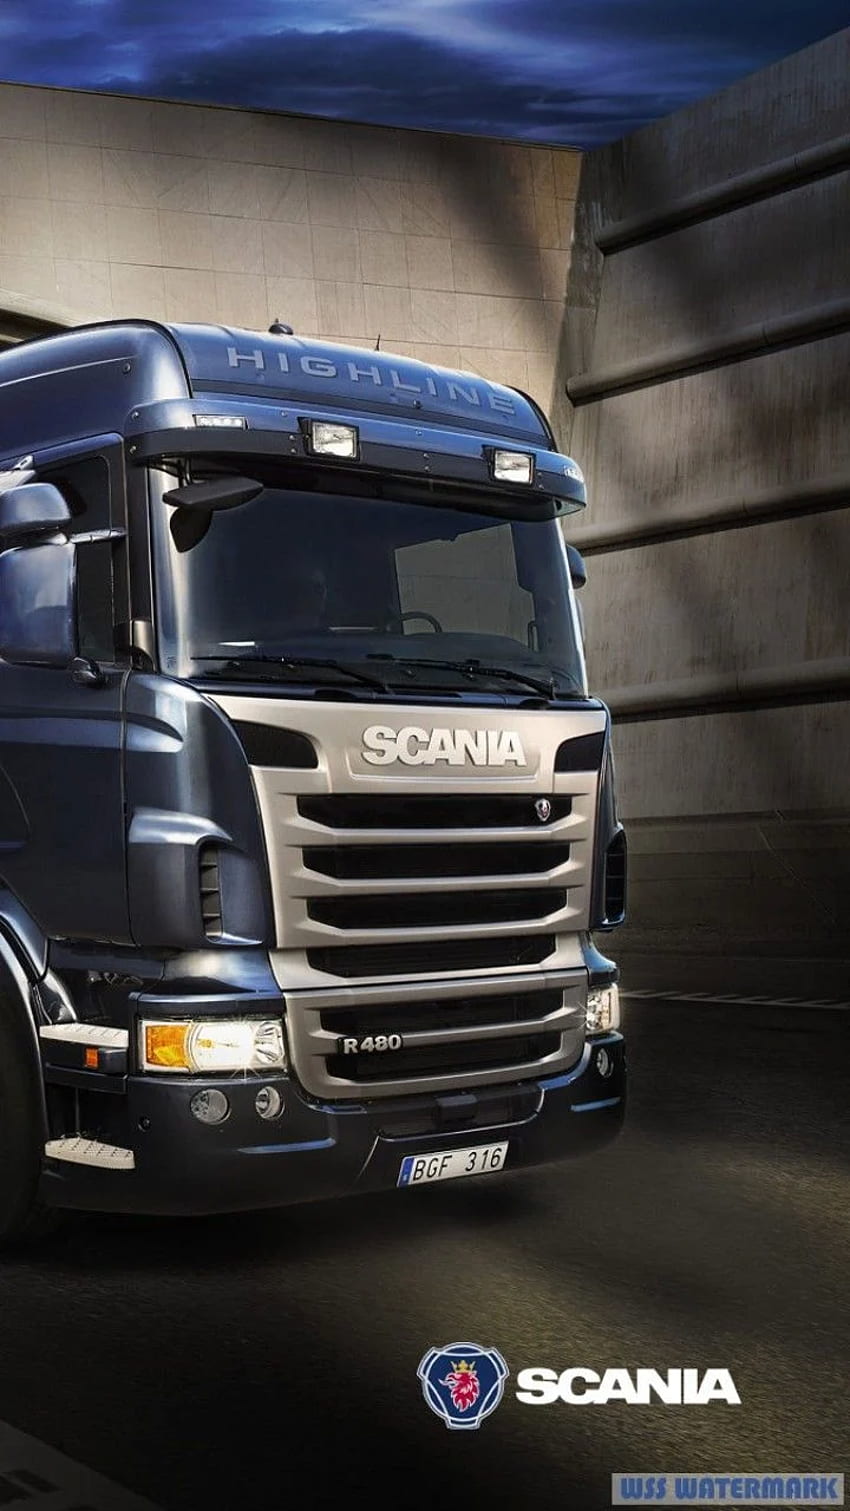 Camion Scania e - Elsetge Sfondo del telefono HD